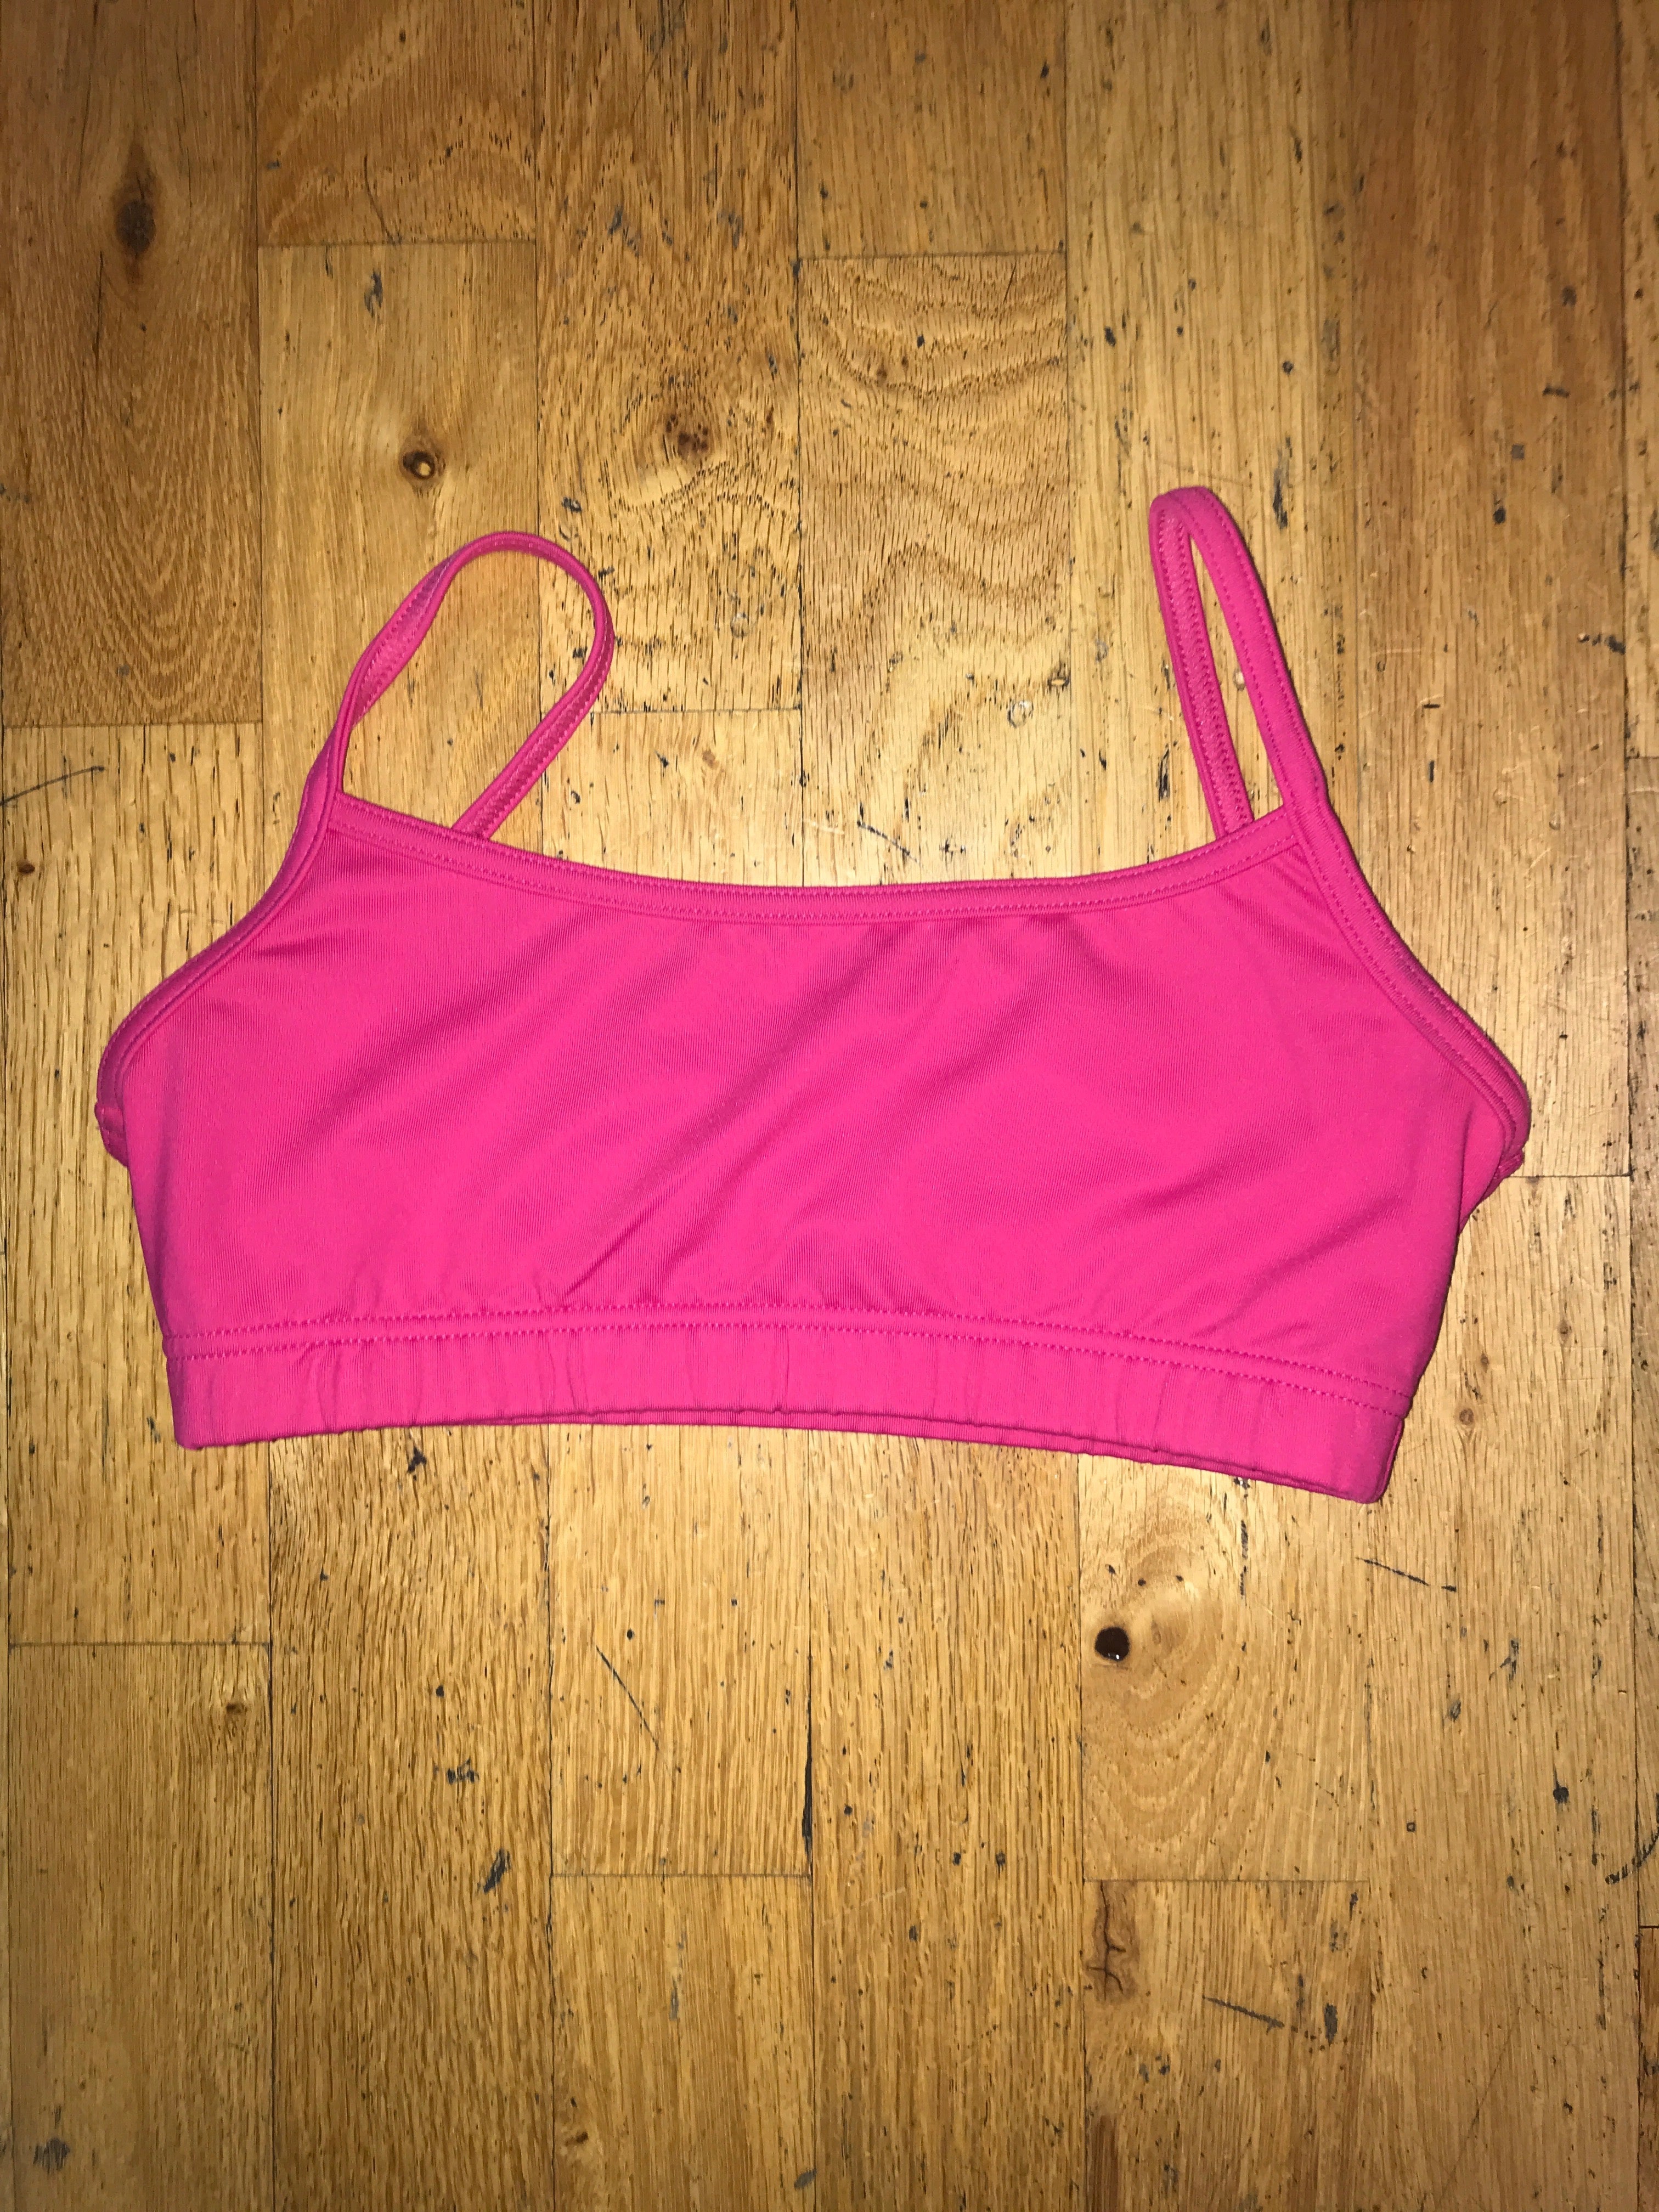 Women's Bra Top. Hot Pink, – Dancewear Inc.